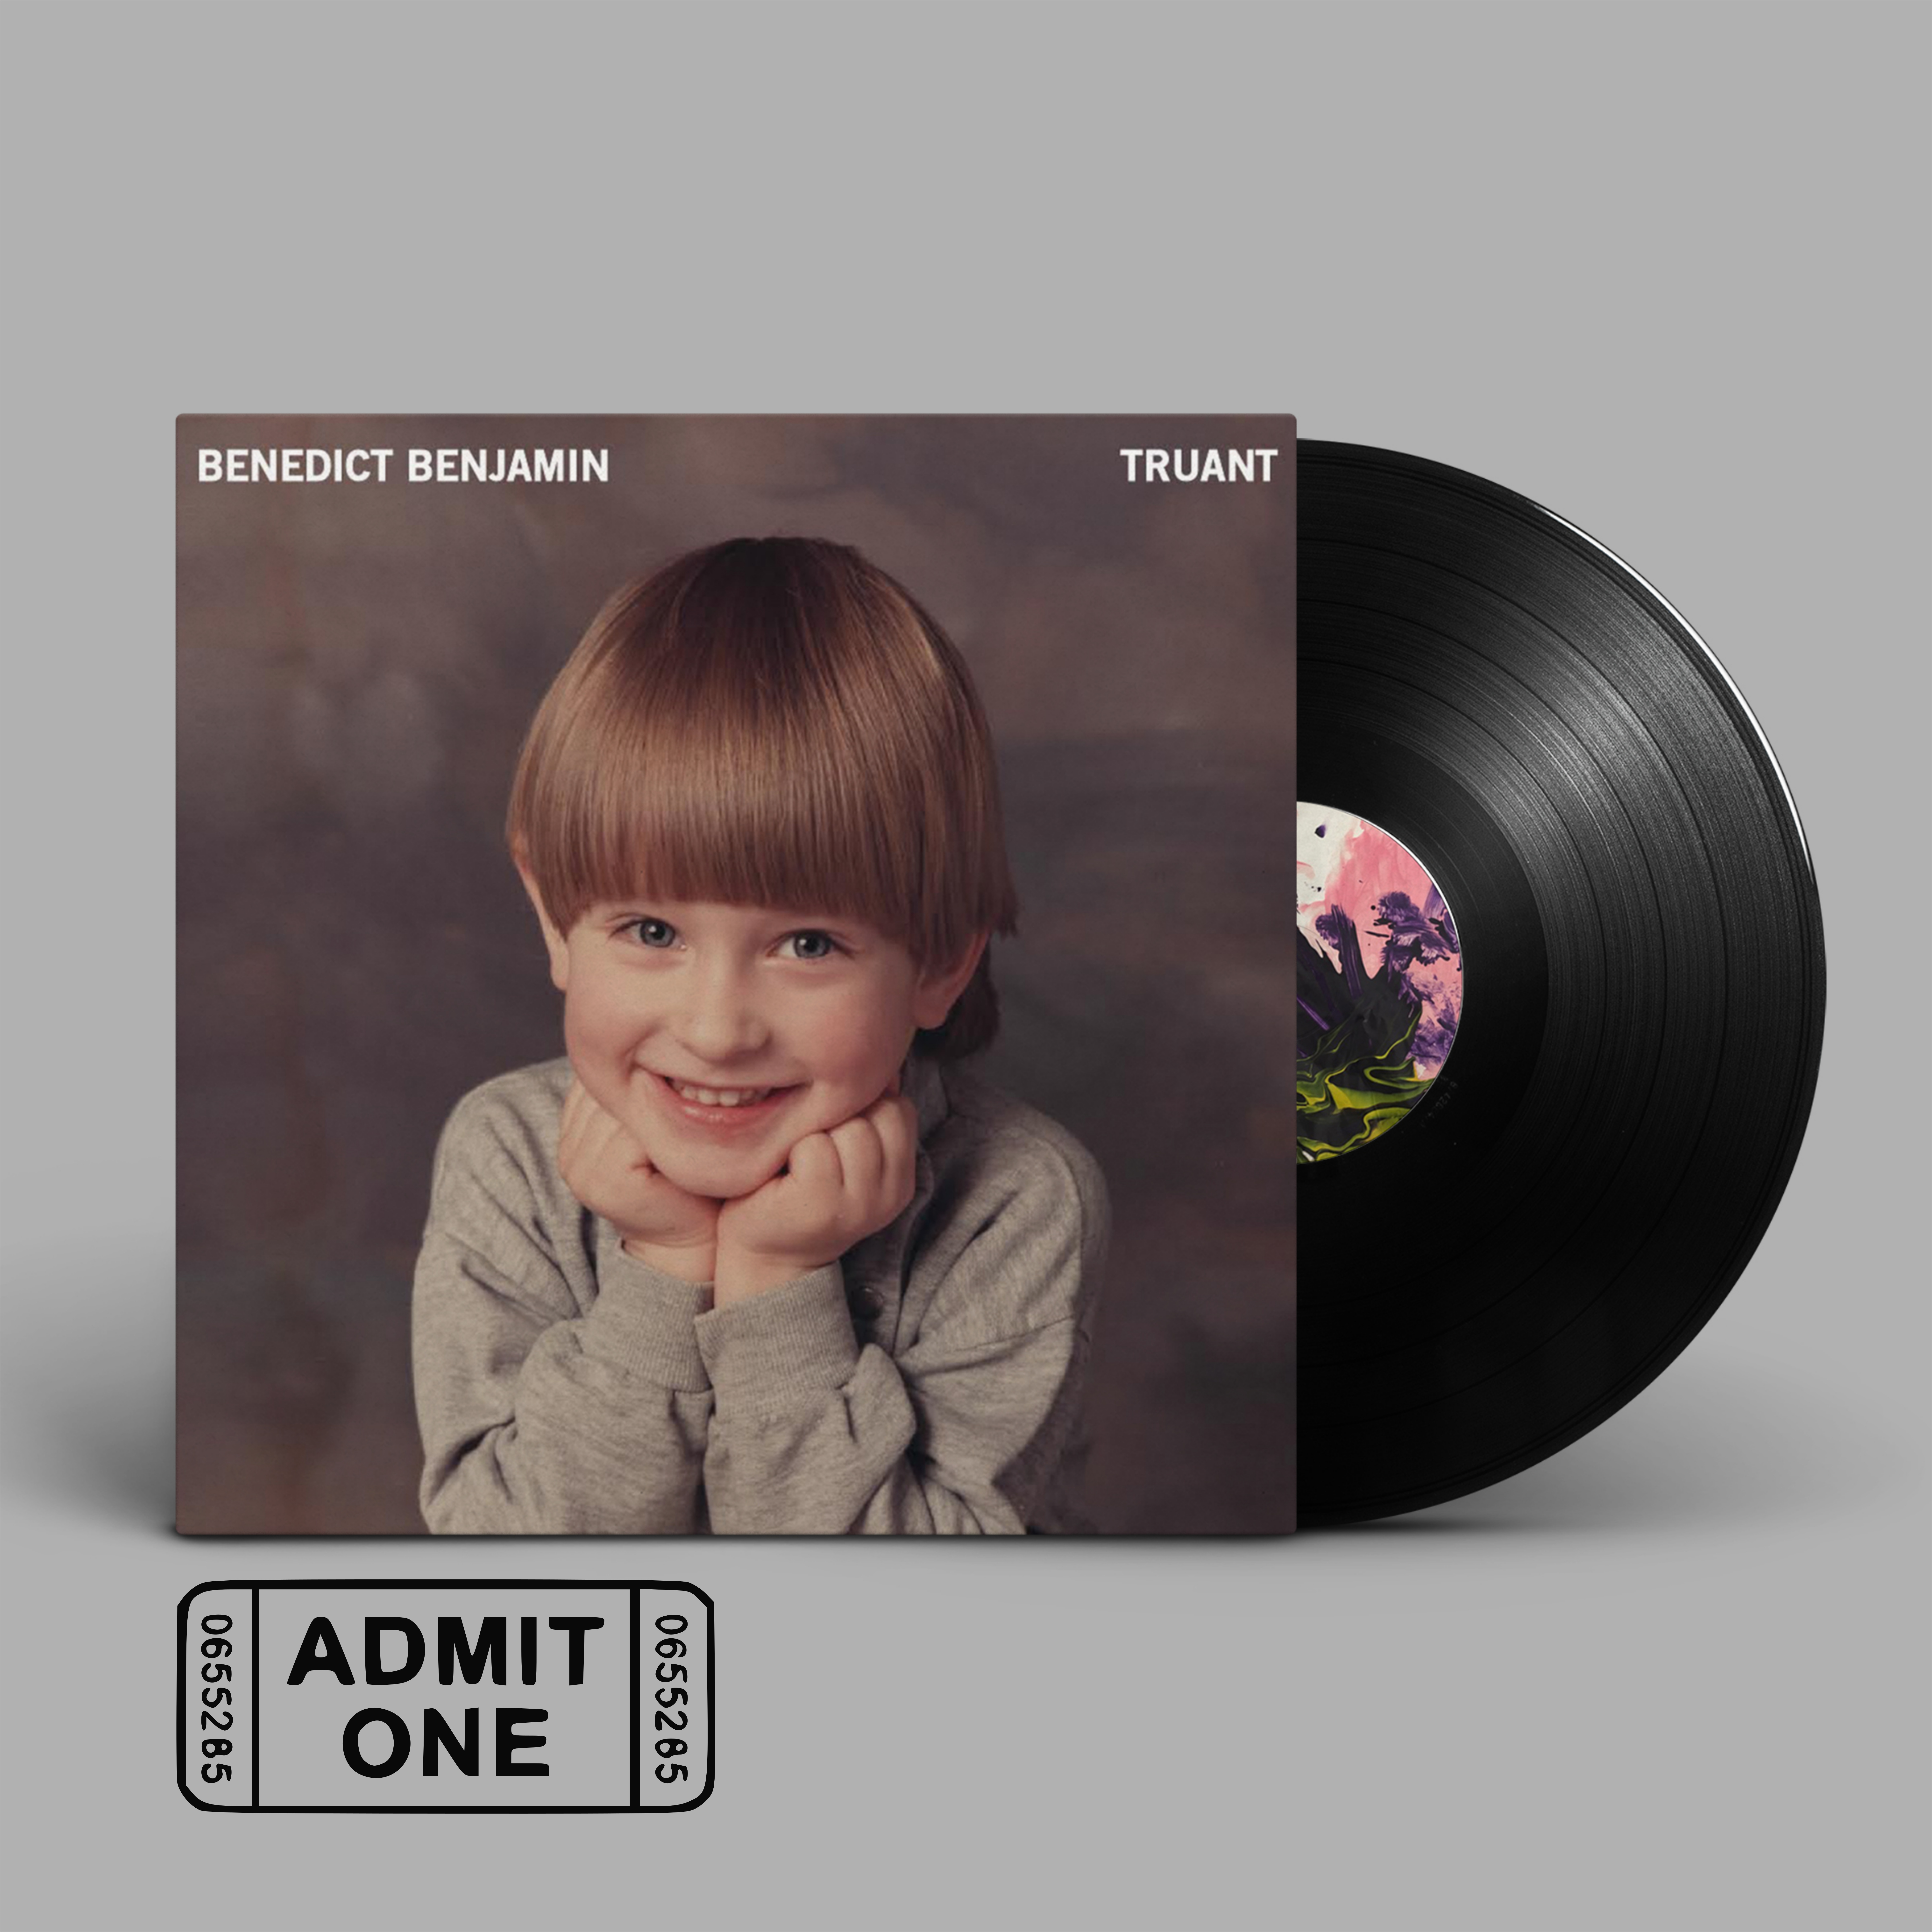 Truant 12" Vinyl + Ticket to London album launch - BENEDICT BENJAMIN